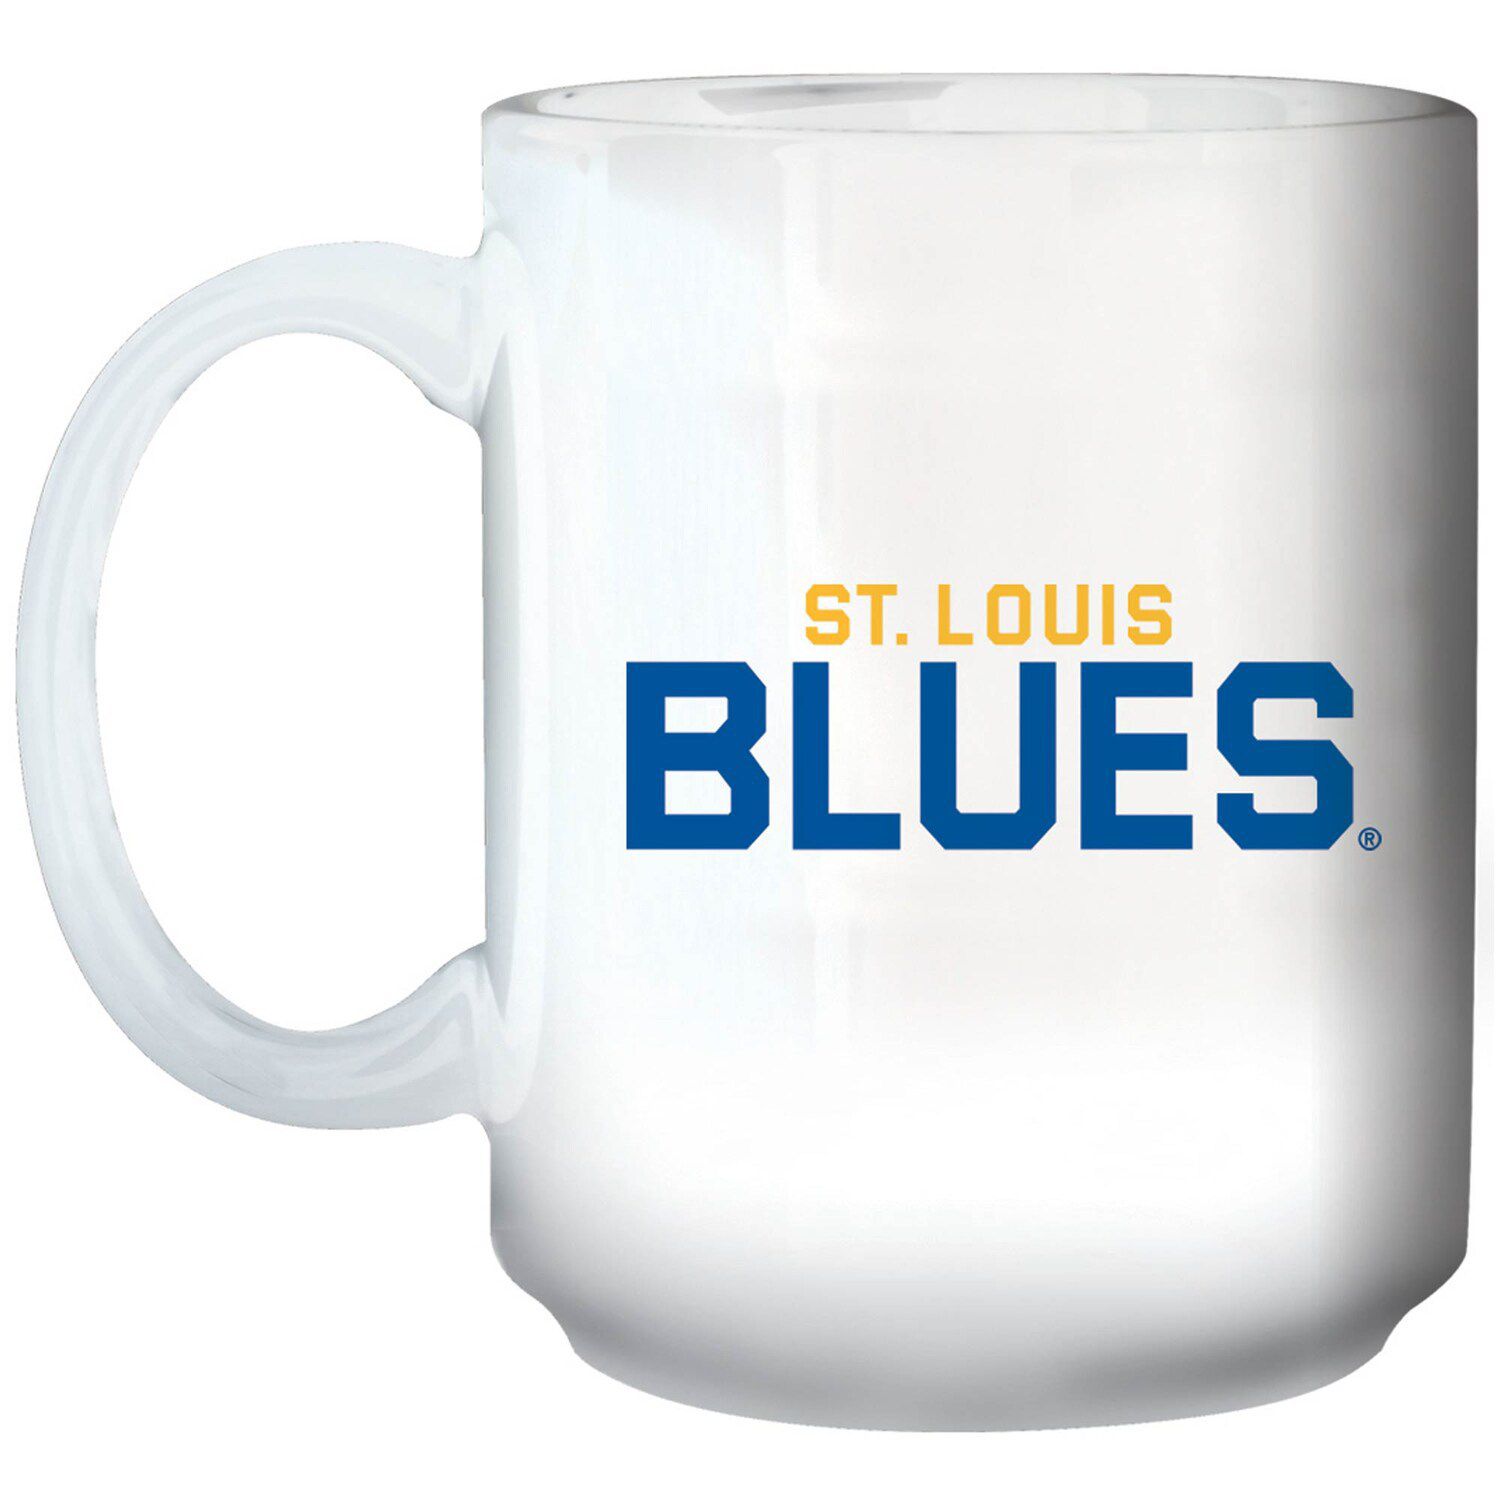 Image for Unbranded St. Louis Blues 15oz. Primary Logo Mug at Kohl's.